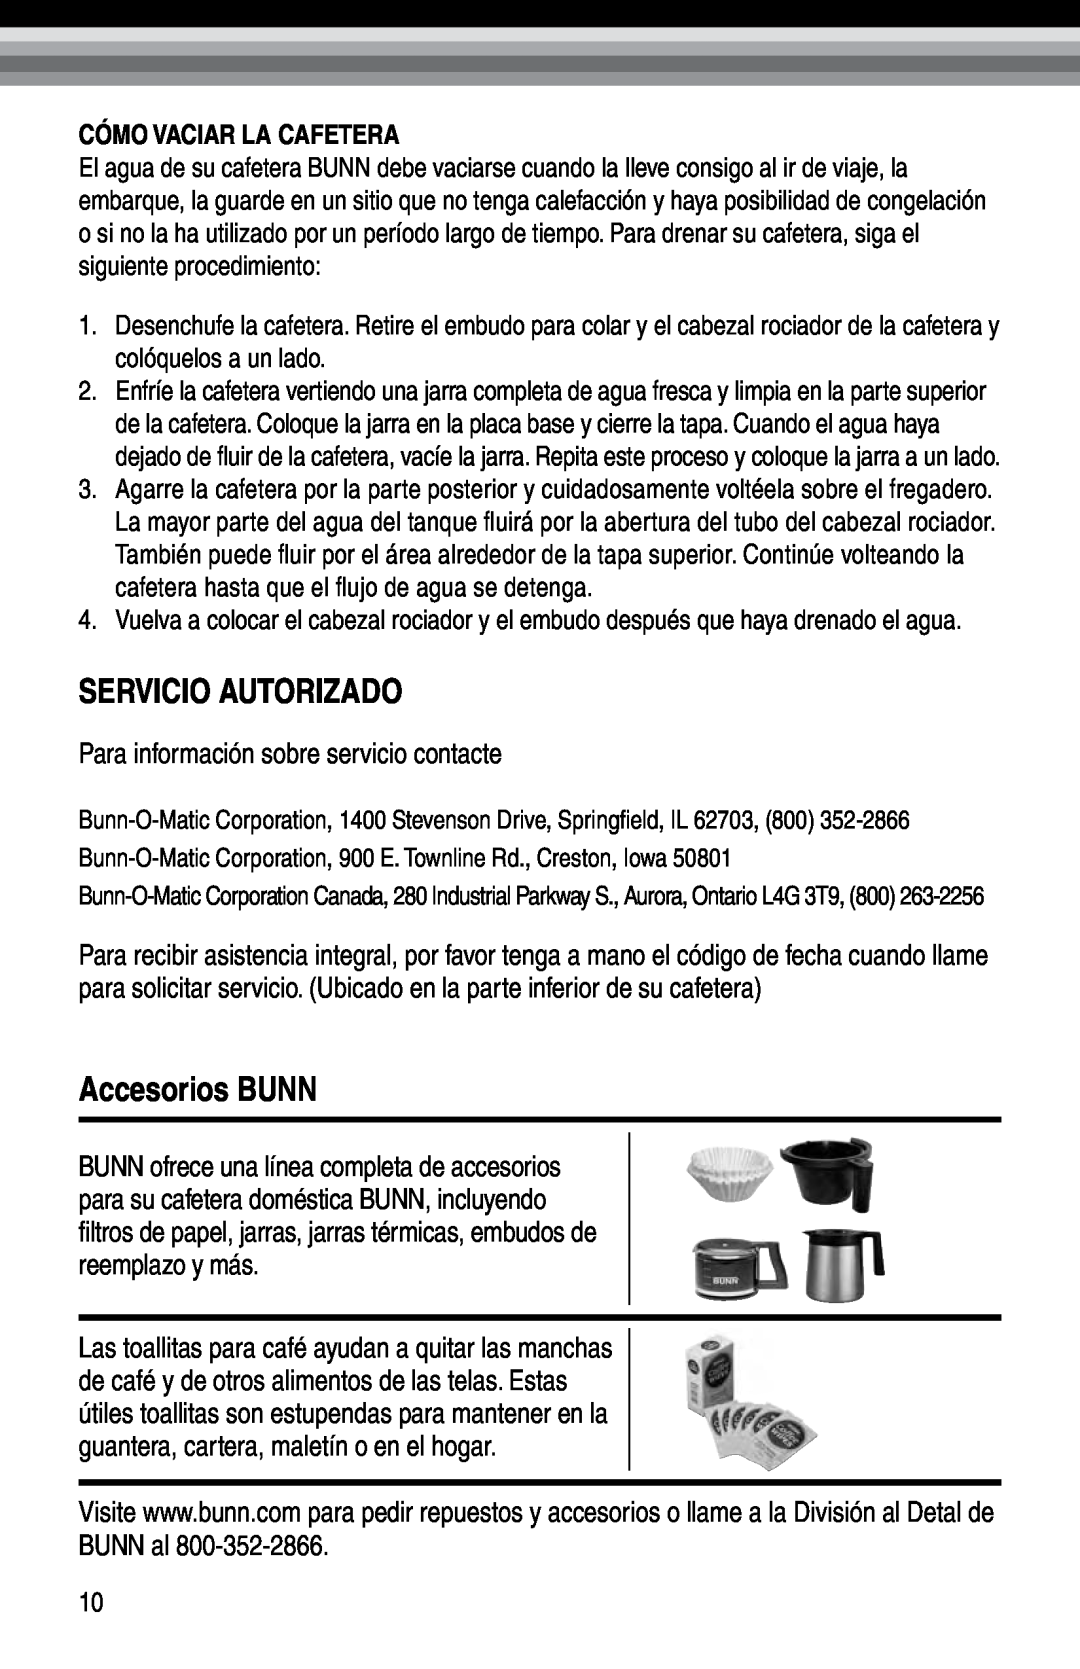 Bunn NHBX manual Servicio Autorizado, Accesorios BUNN, Para información sobre servicio contacte, Cómo Vaciar La Cafetera 